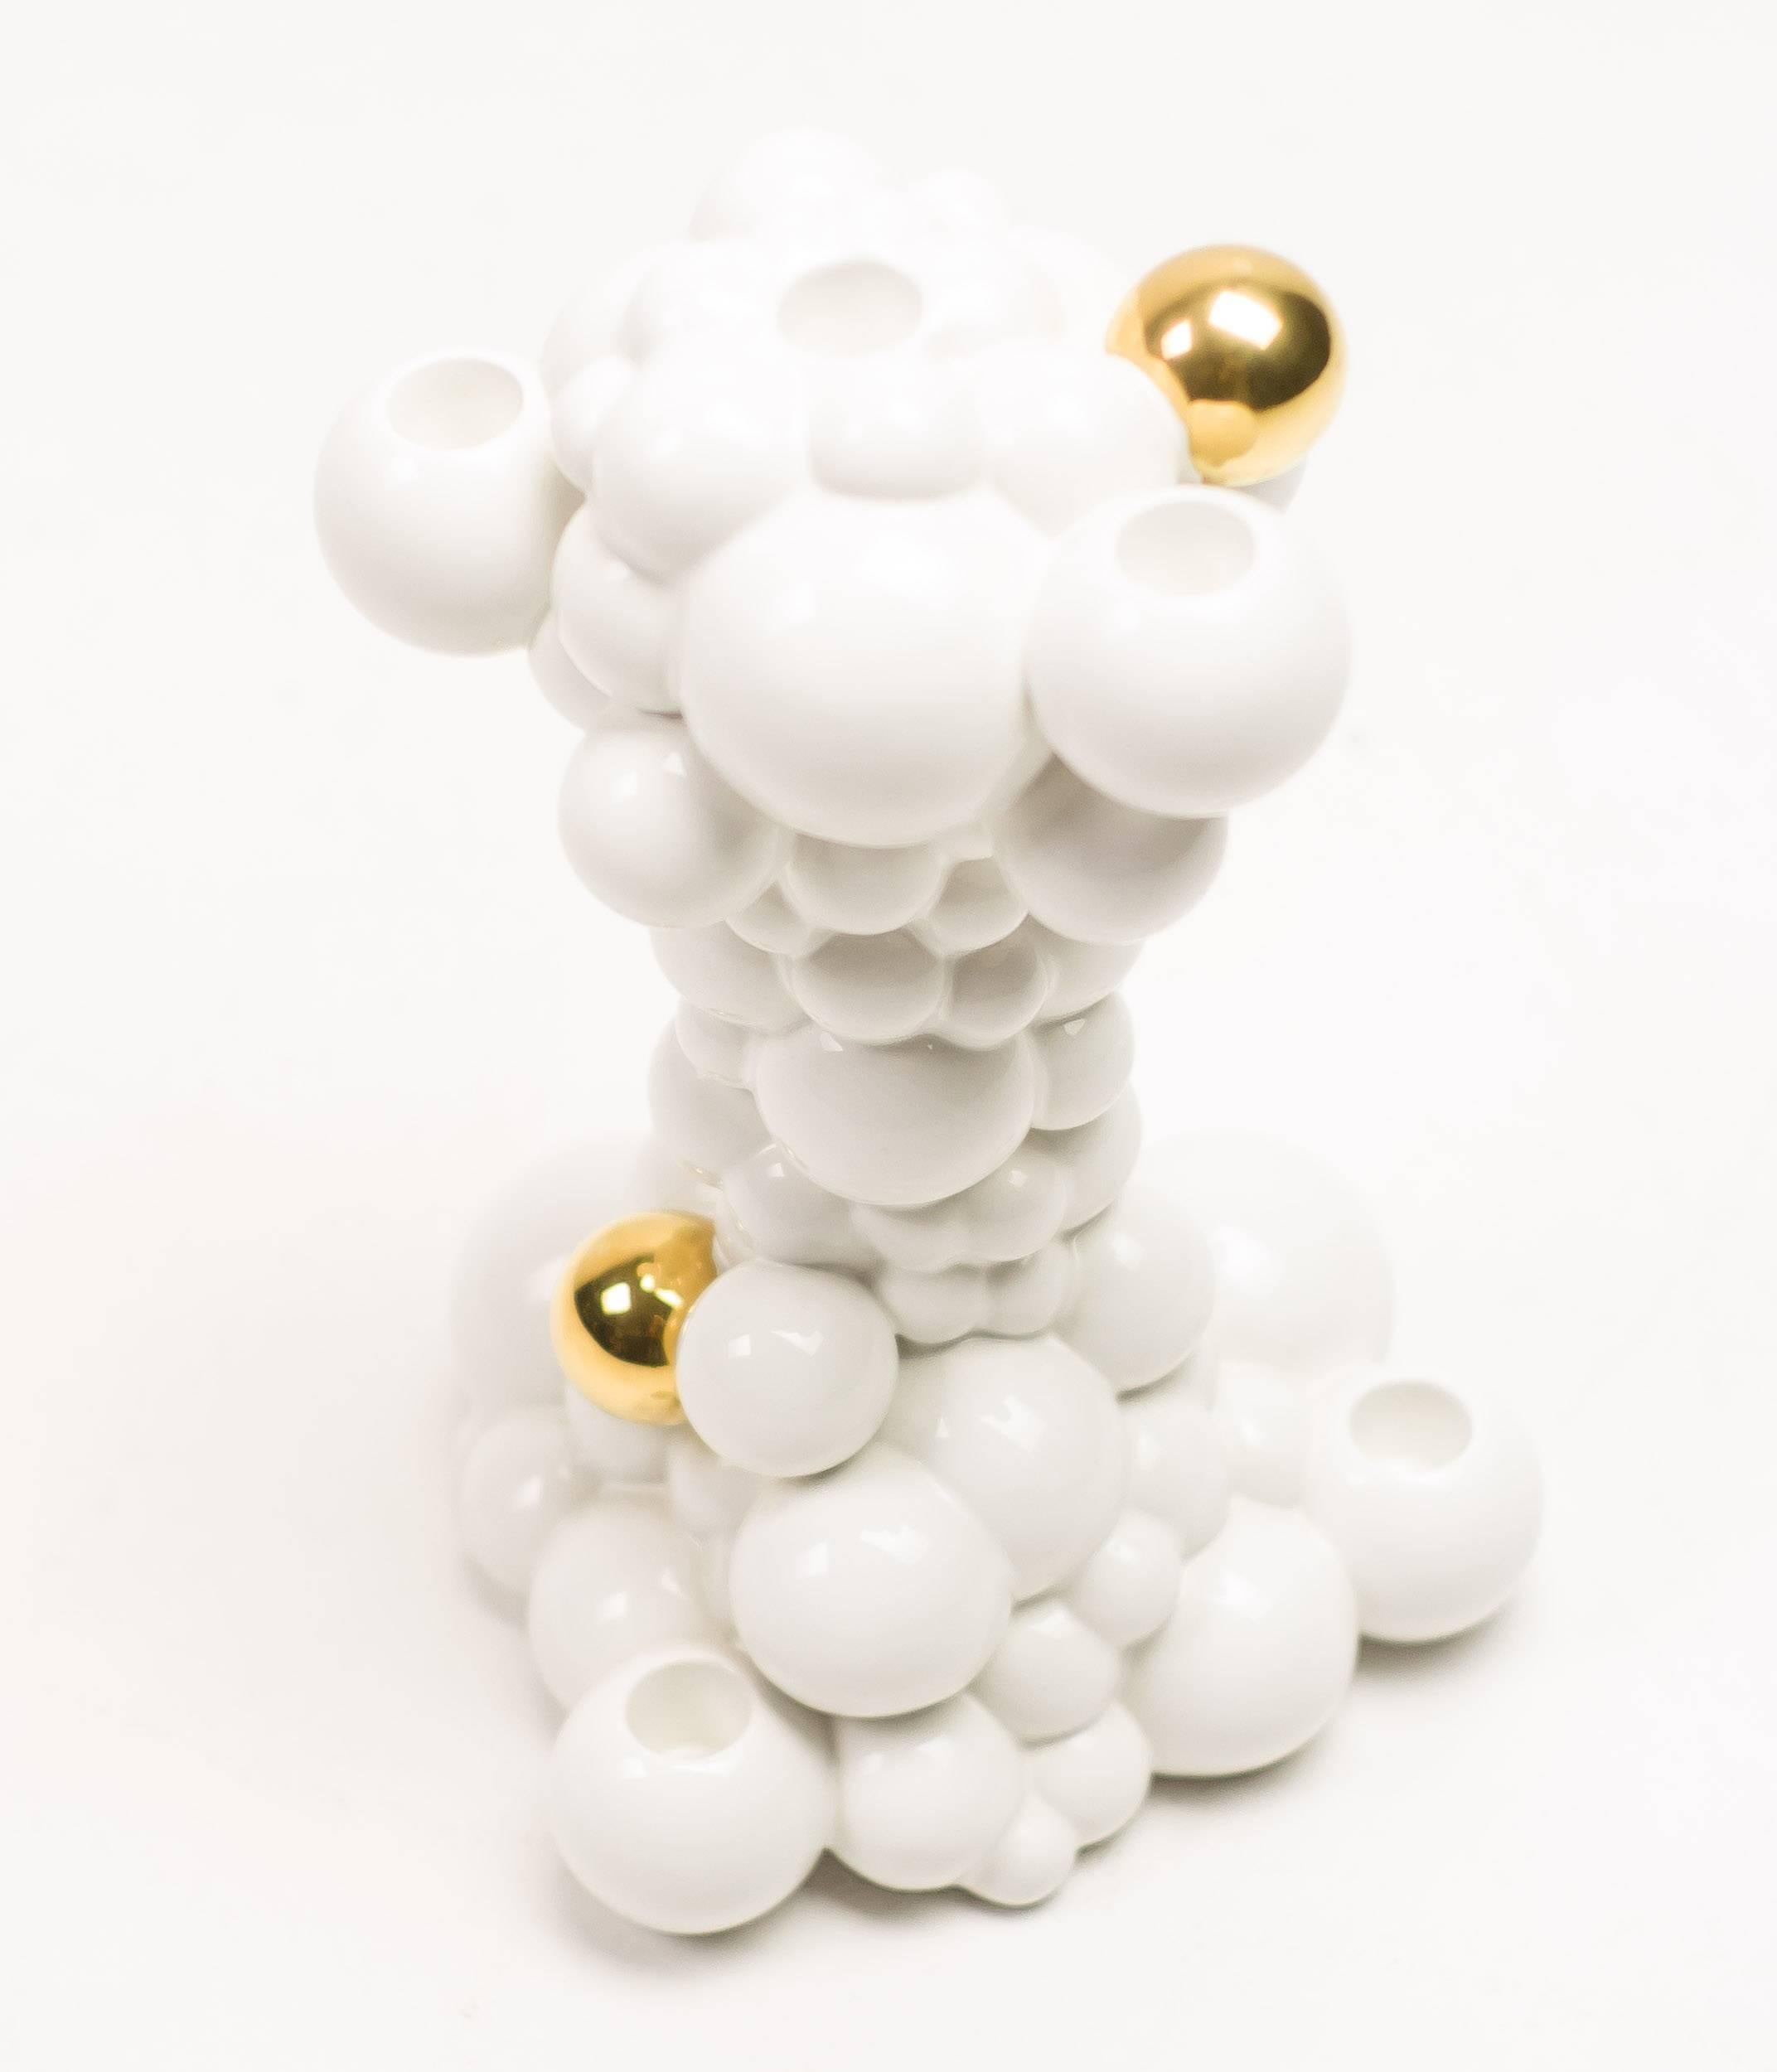 Modern Jaime Hayon Bubbles Candleholder for Bosa